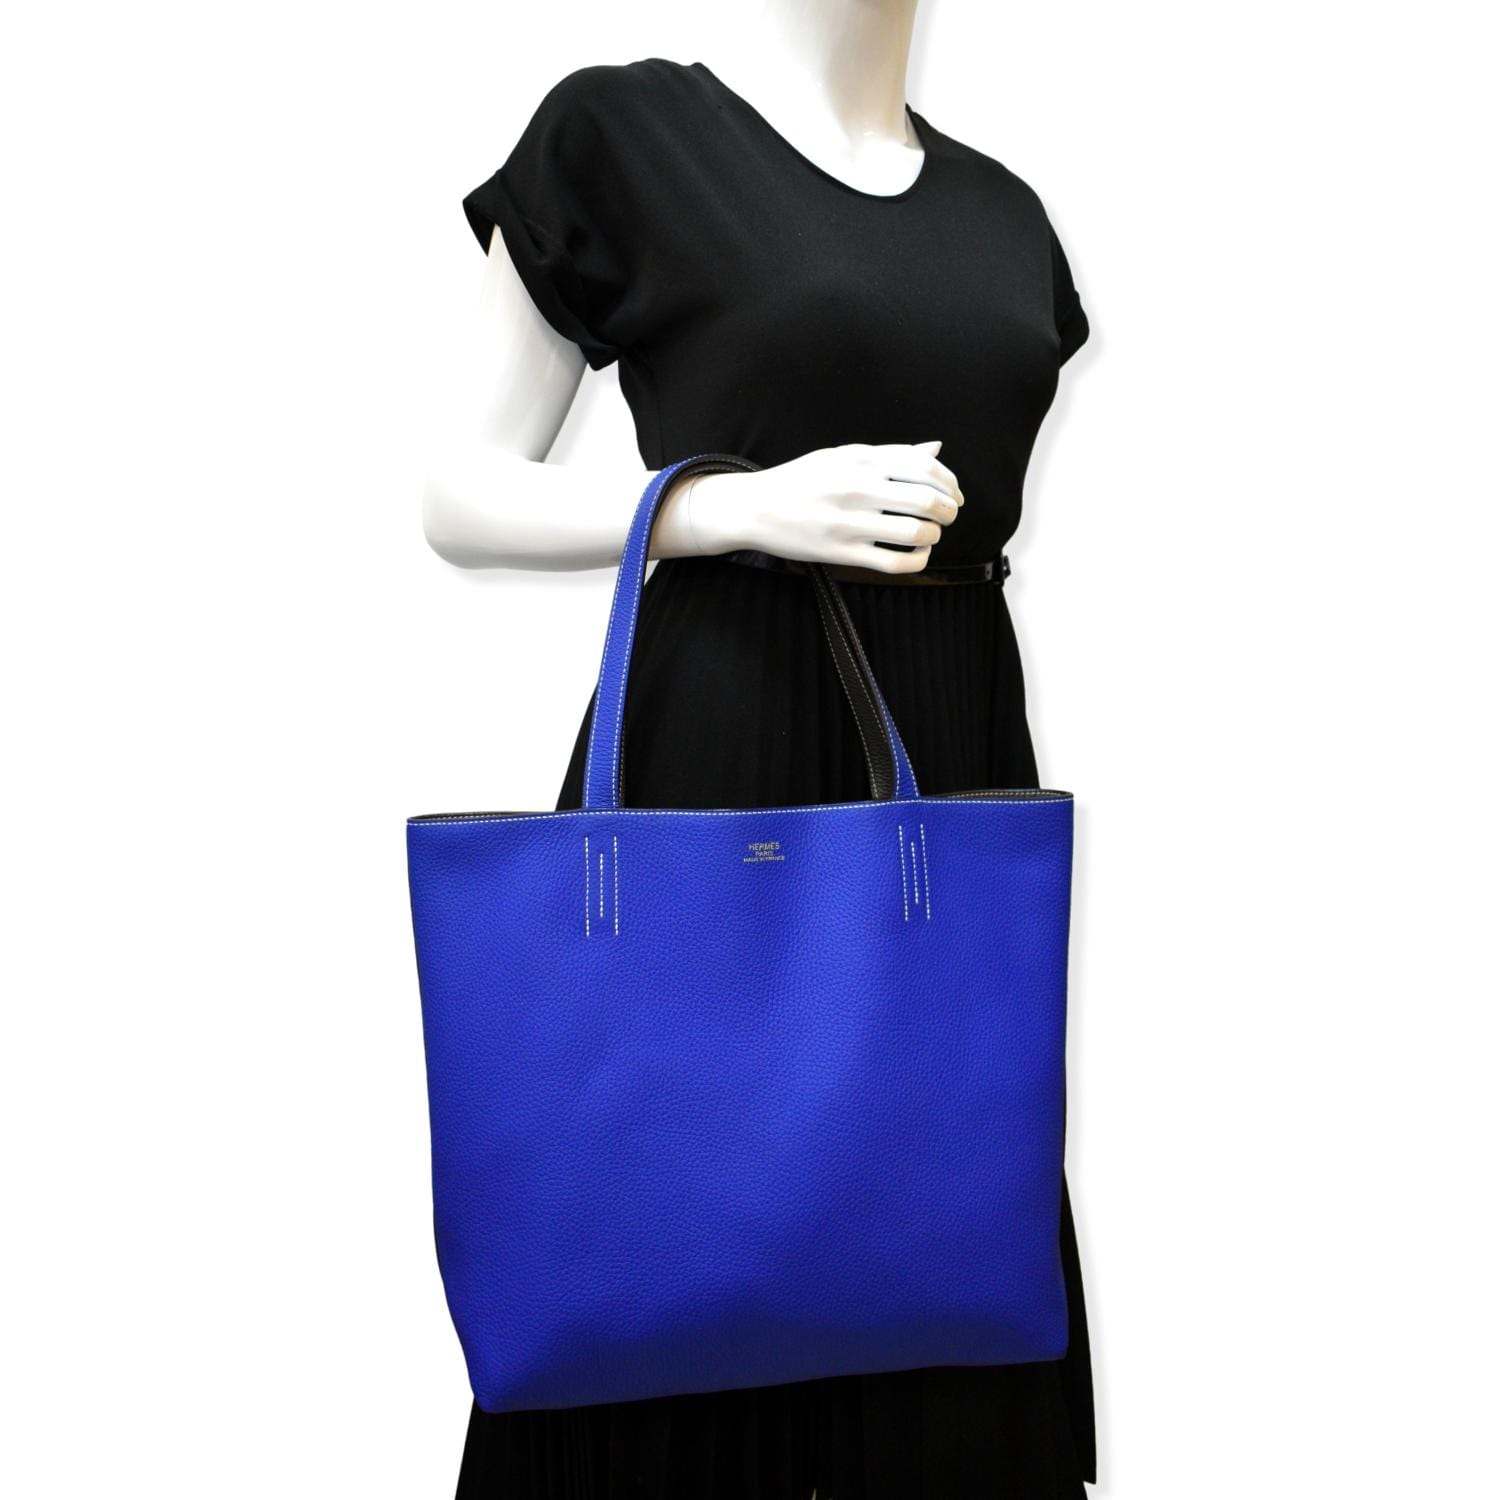 Hermès Clemence Double Sens 36 - Blue Totes, Handbags - HER447625